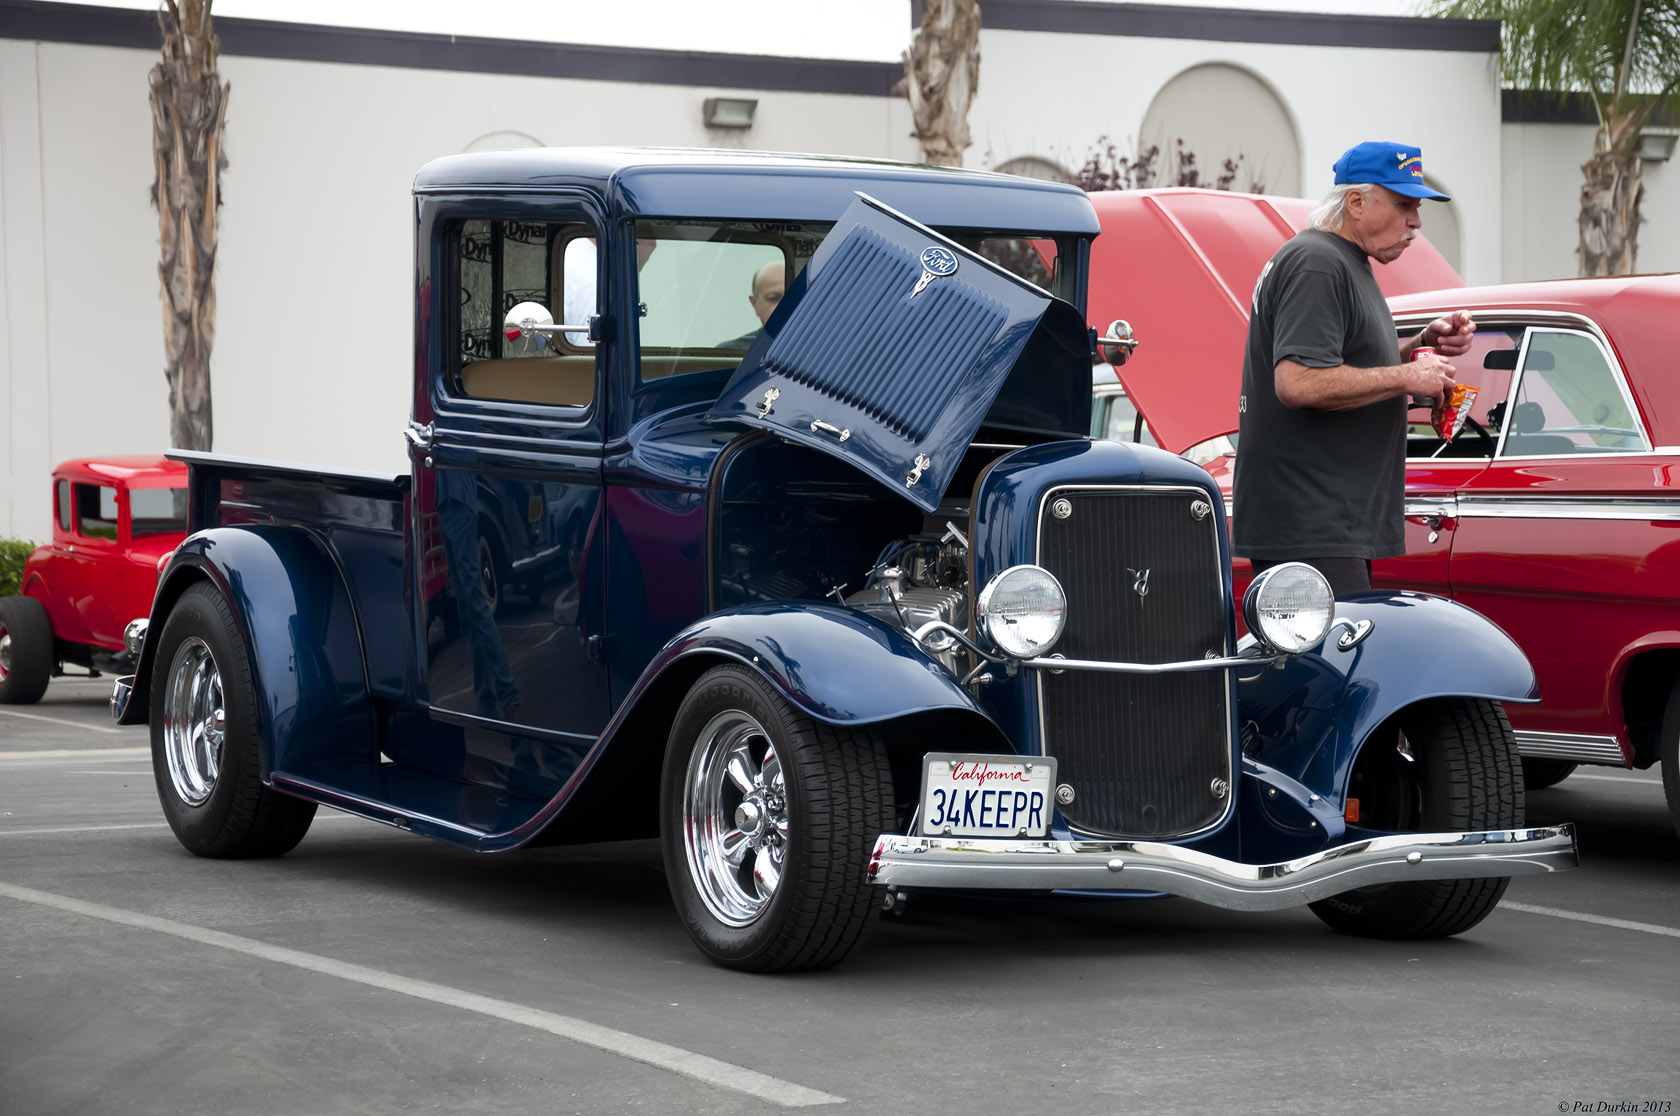 1934 Ford Pickup - street rod | Flickr - Photo Sharing!